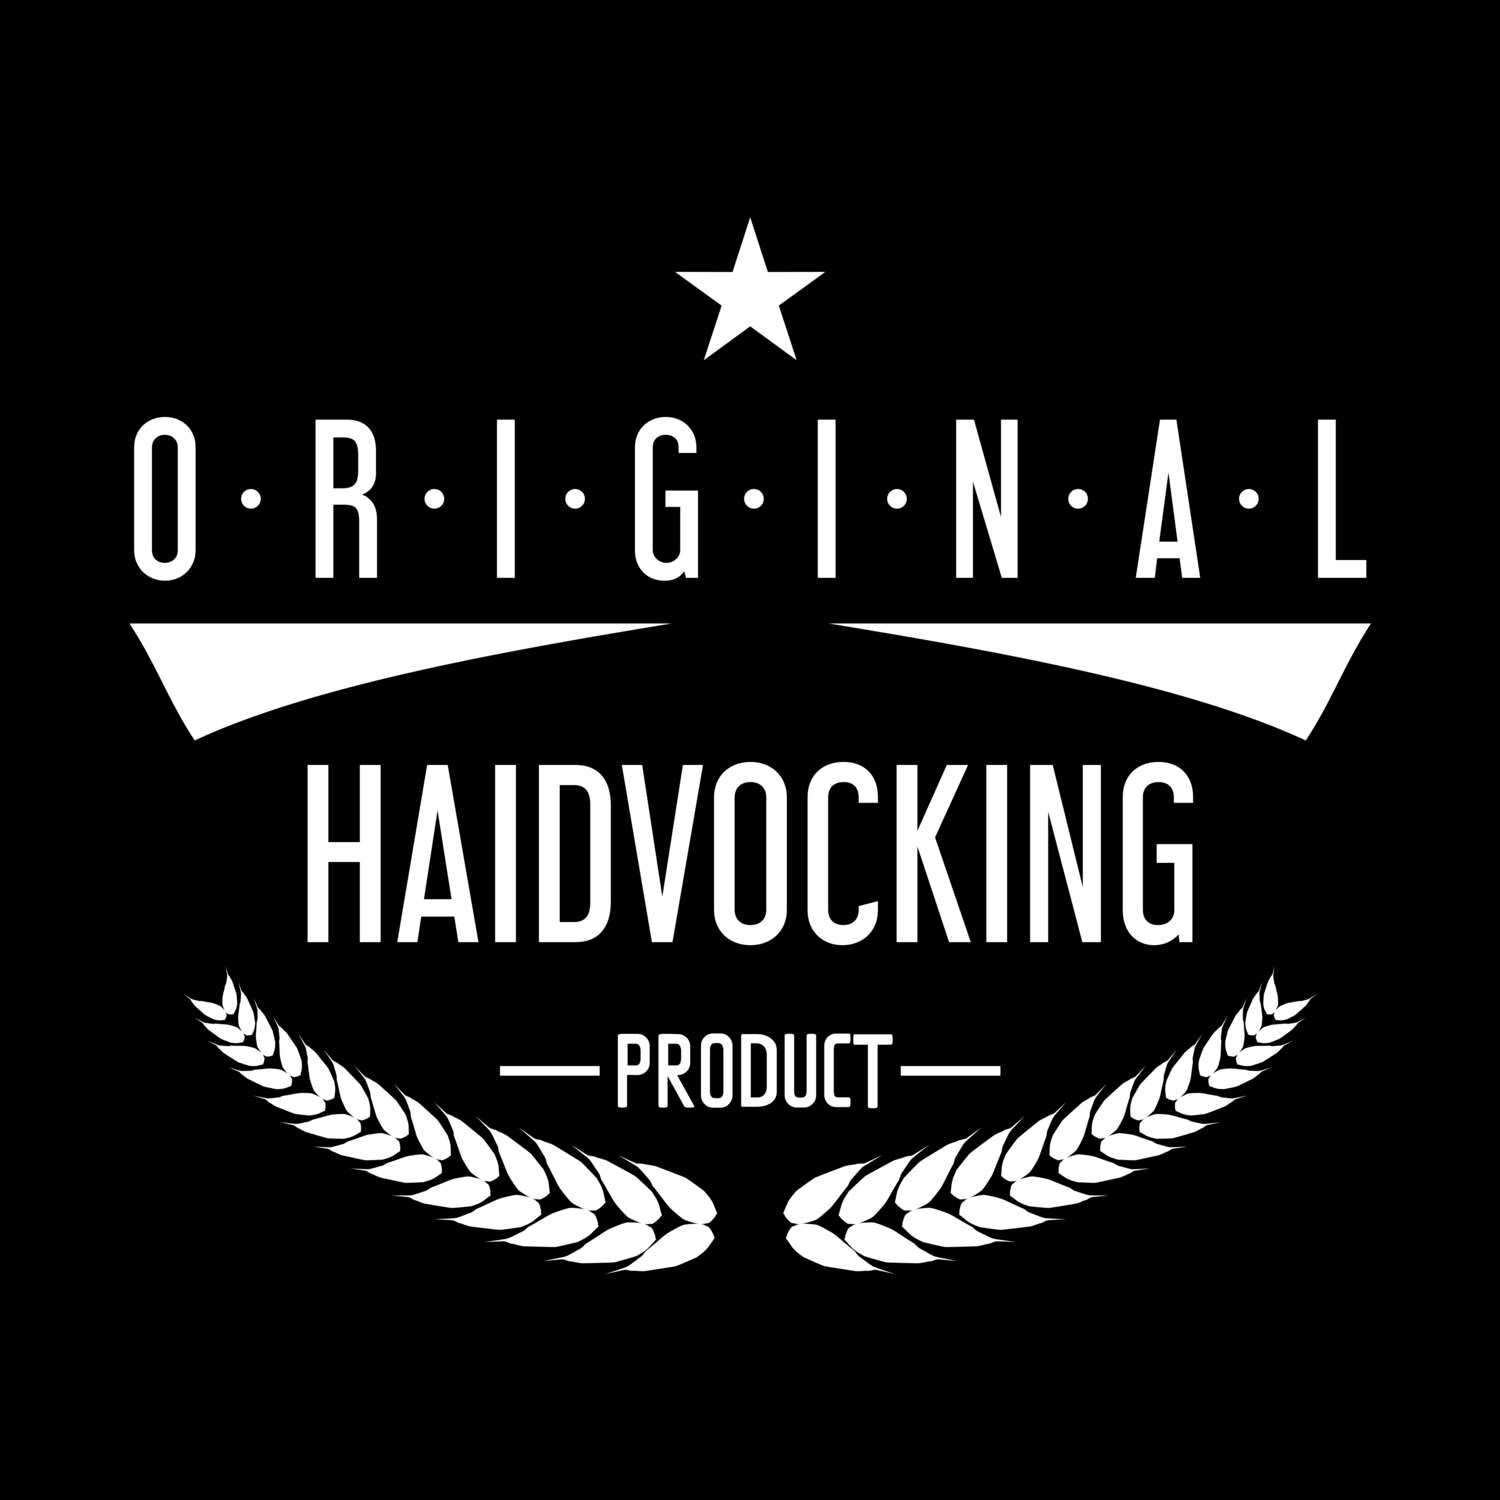 Haidvocking T-Shirt »Original Product«